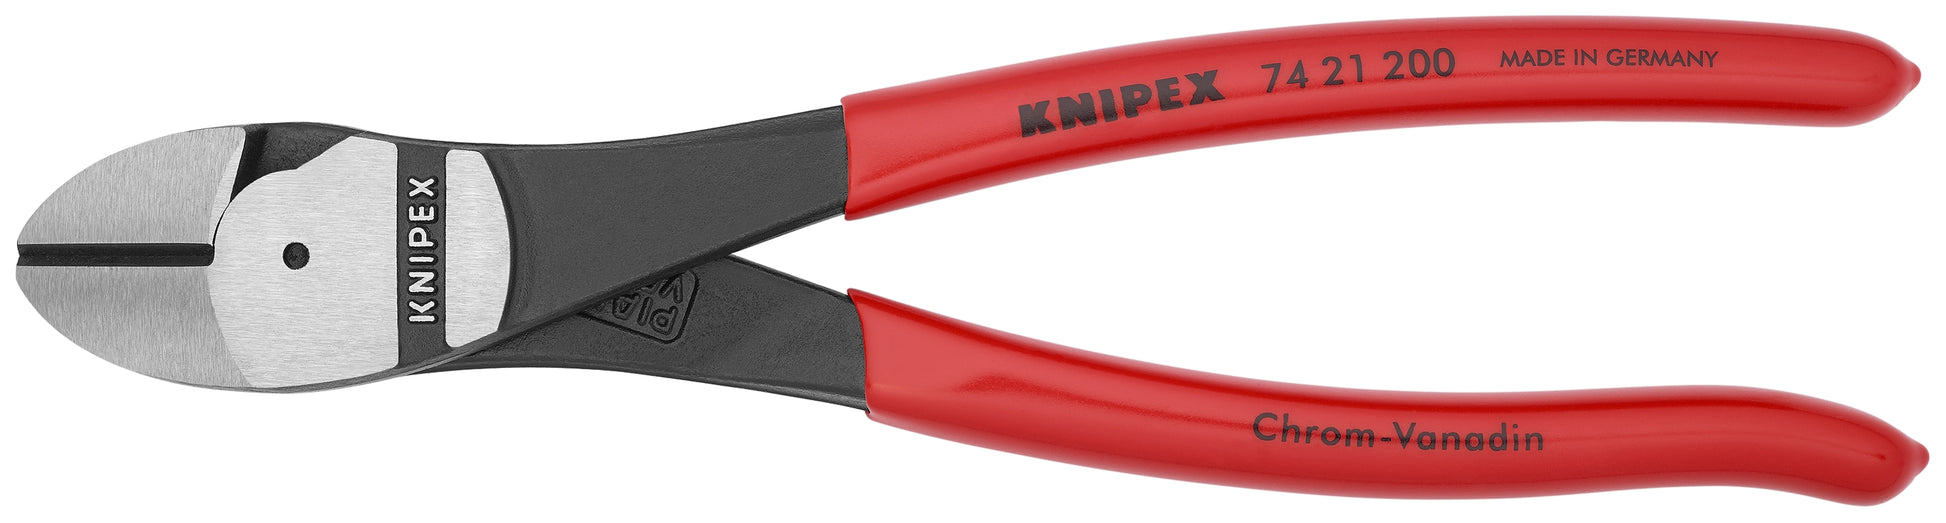 Knipex 00 20 08 US2 3 Piece Pliers Set with Cobra Pliers